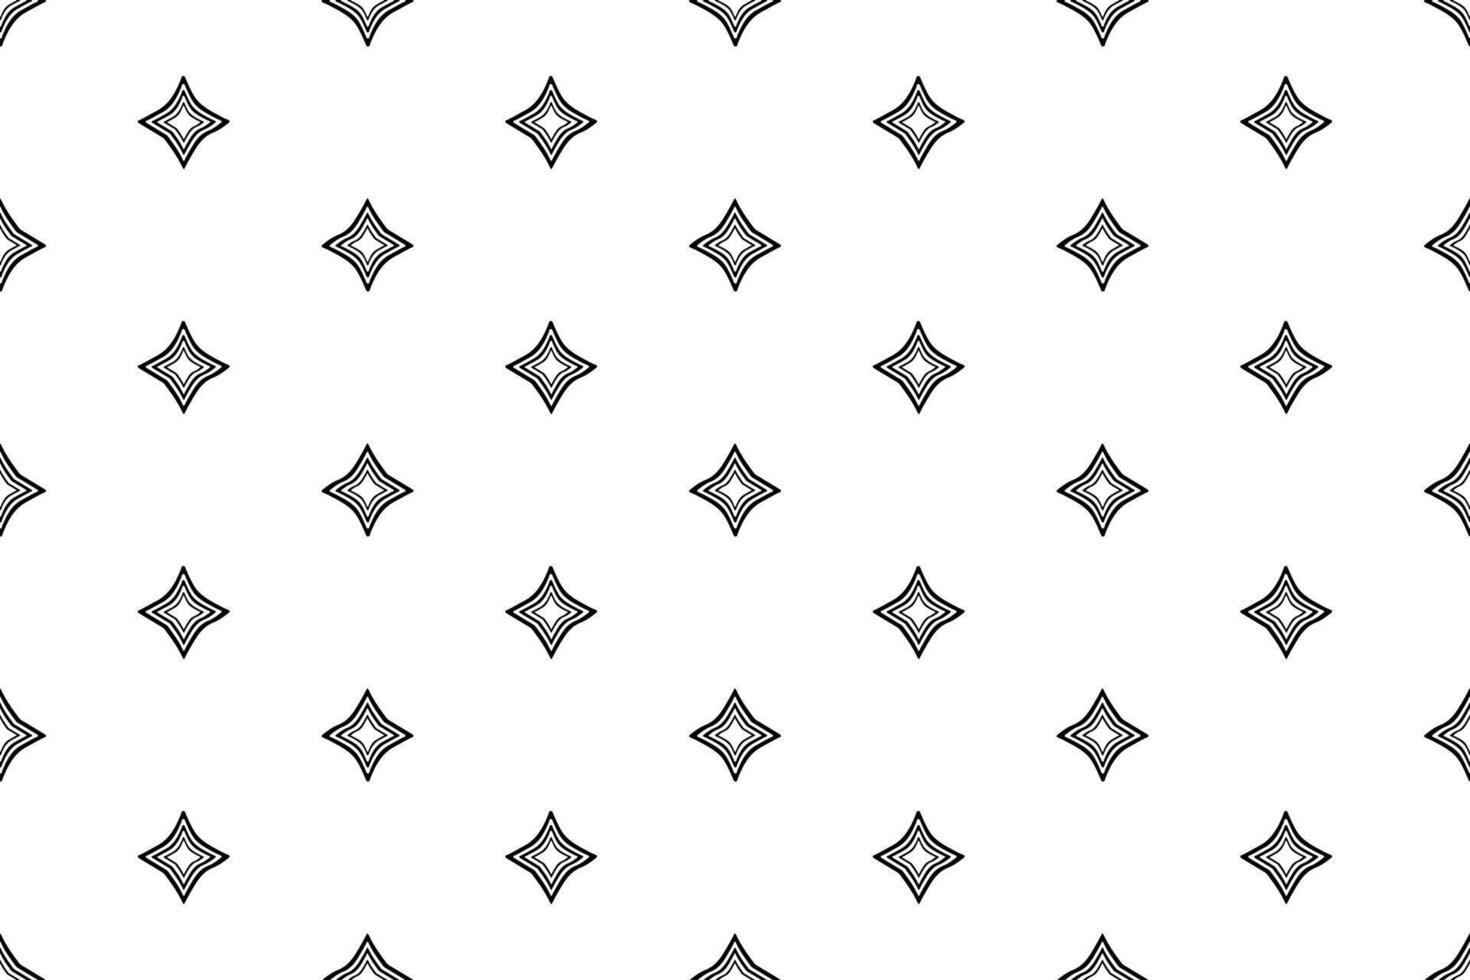 Ornament pattern design. Classic repeat textile vector